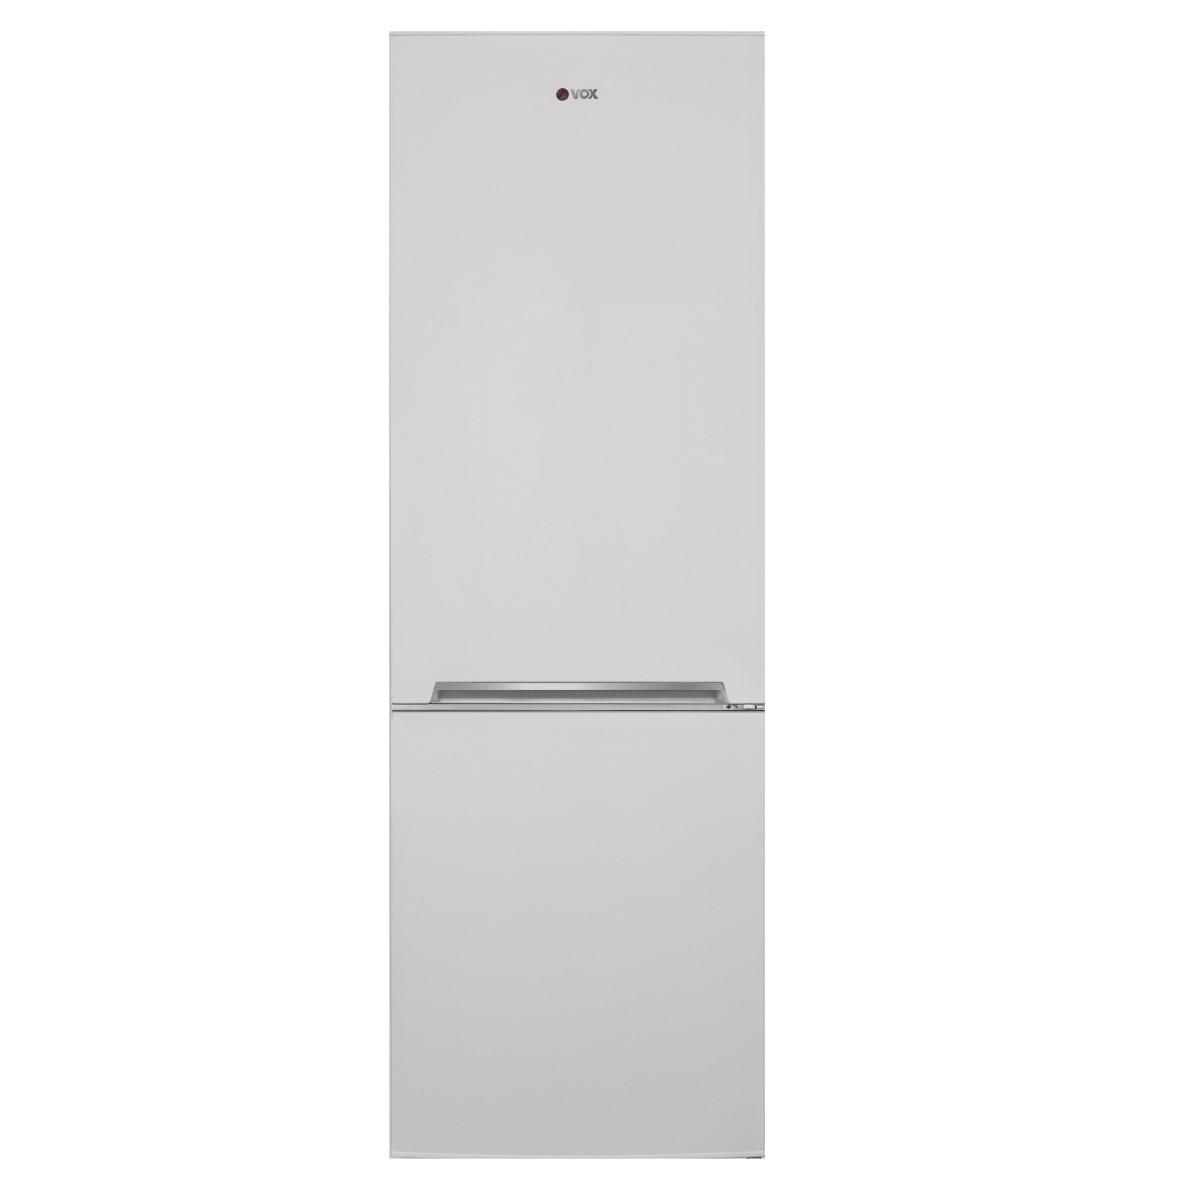 VOX Комбиниран фрижидер KK 3300F